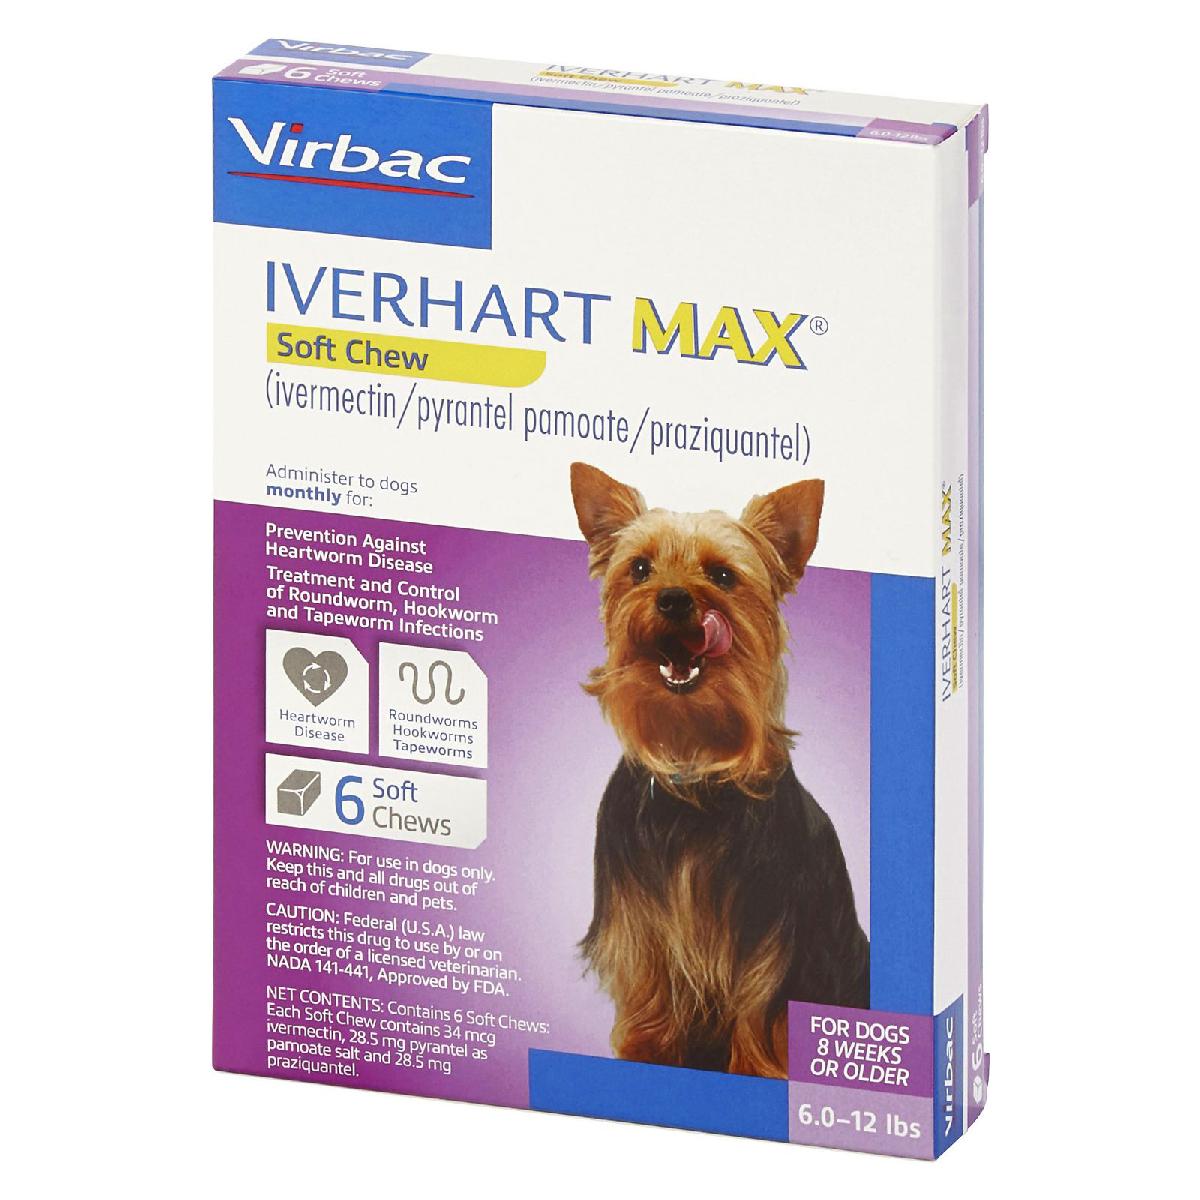 Rx Iverhart Max (ivermectin/pyrantel pamoate/praziquantel) Chewable